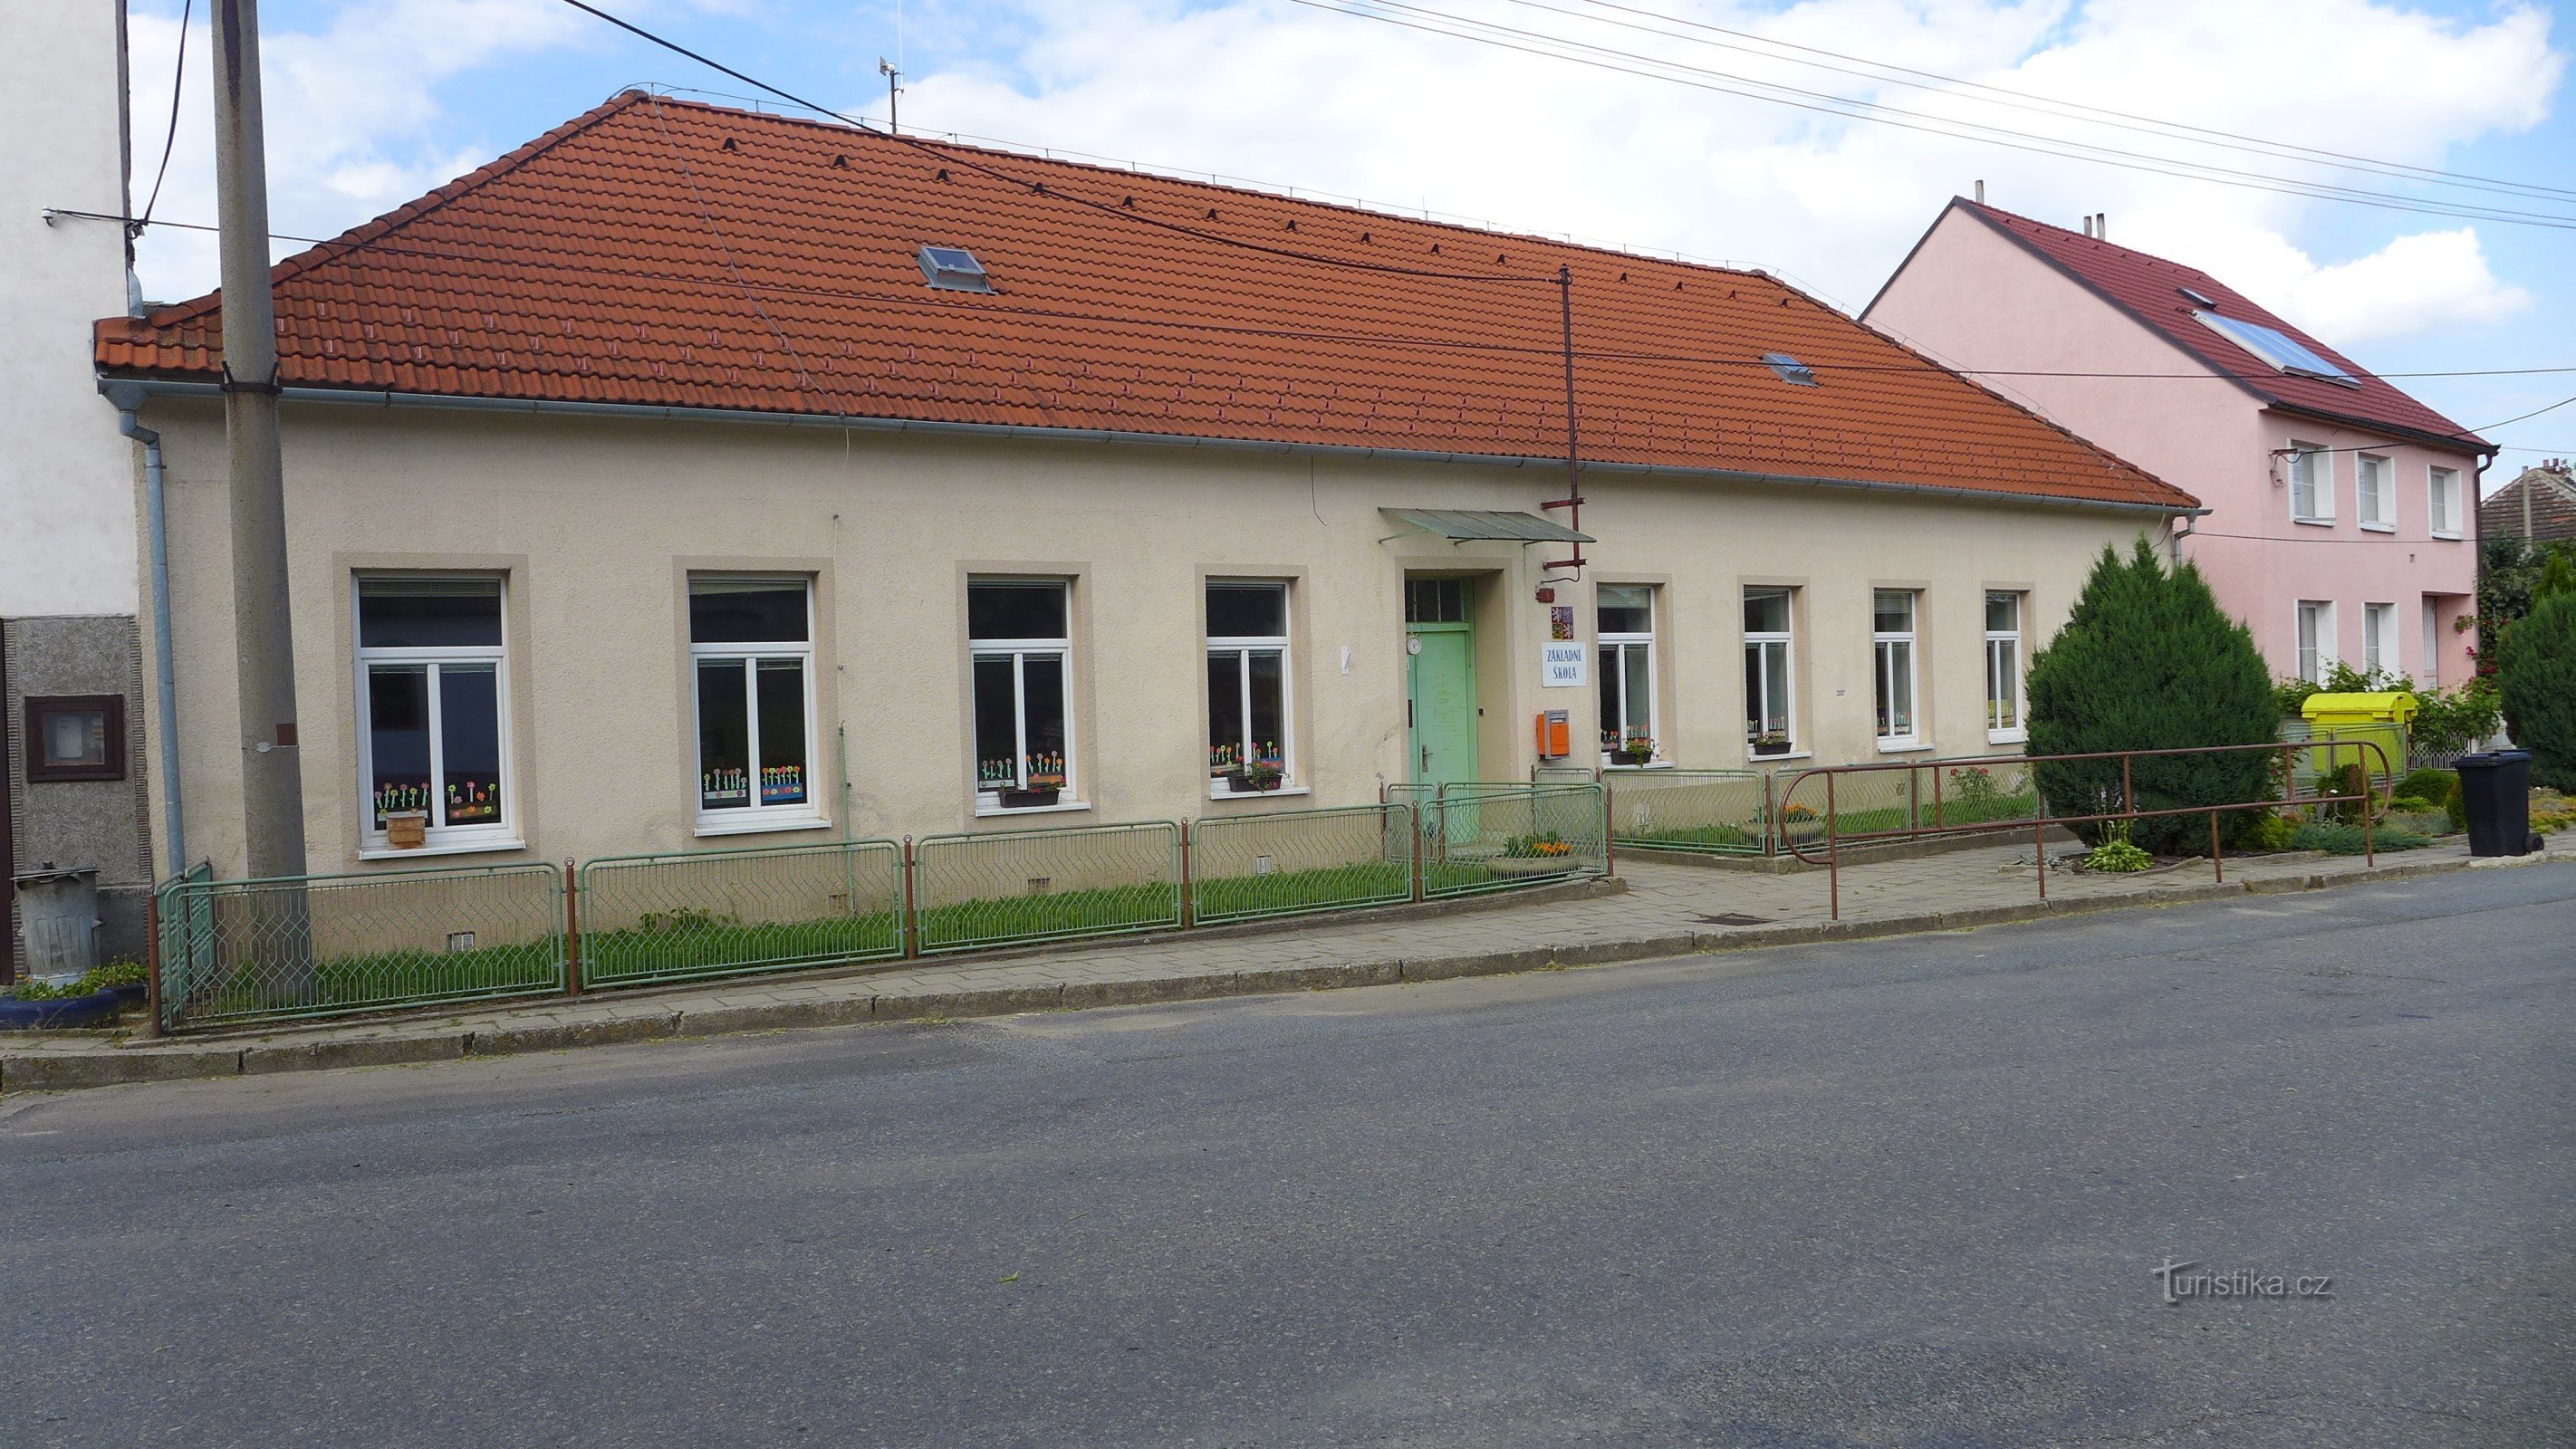 Долни Вилемовице - начальная школа